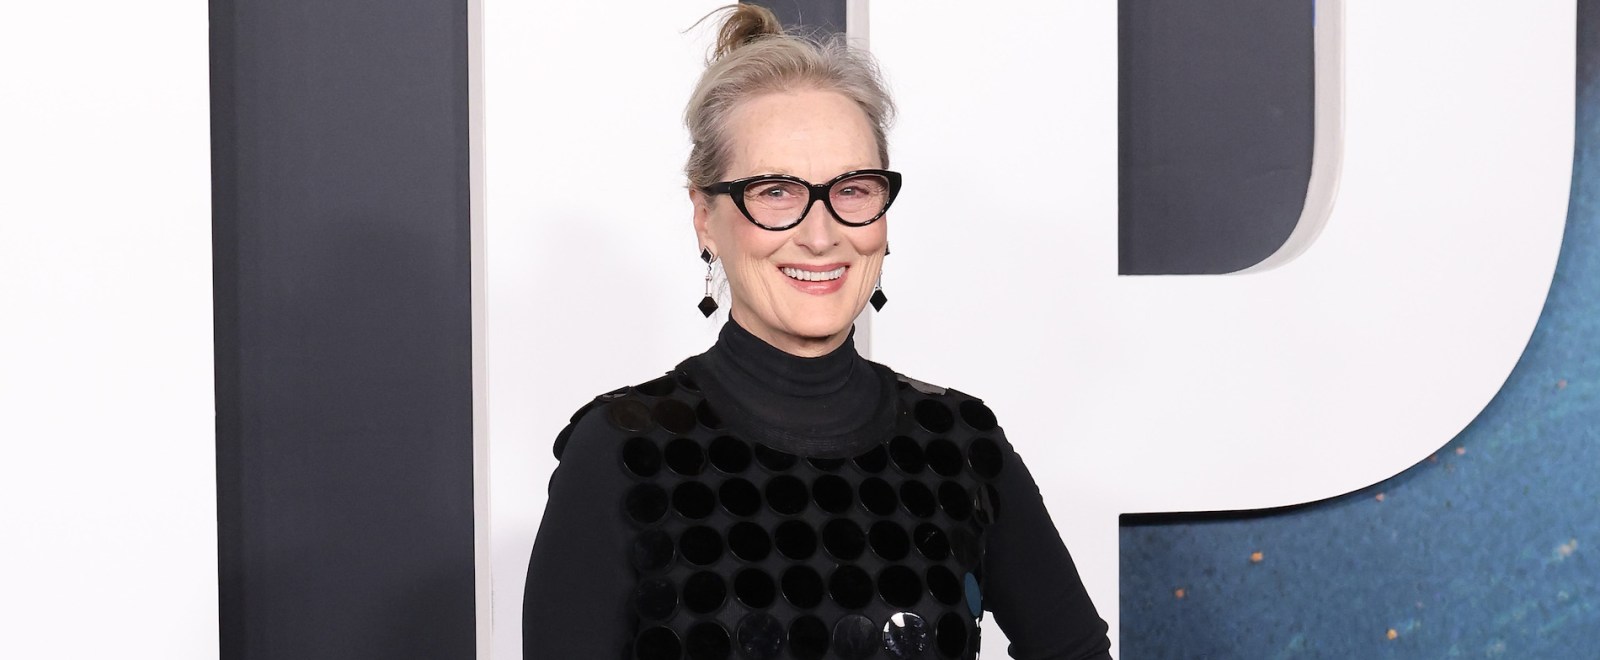 Meryl Streep Don't Look Up Premiere 2021